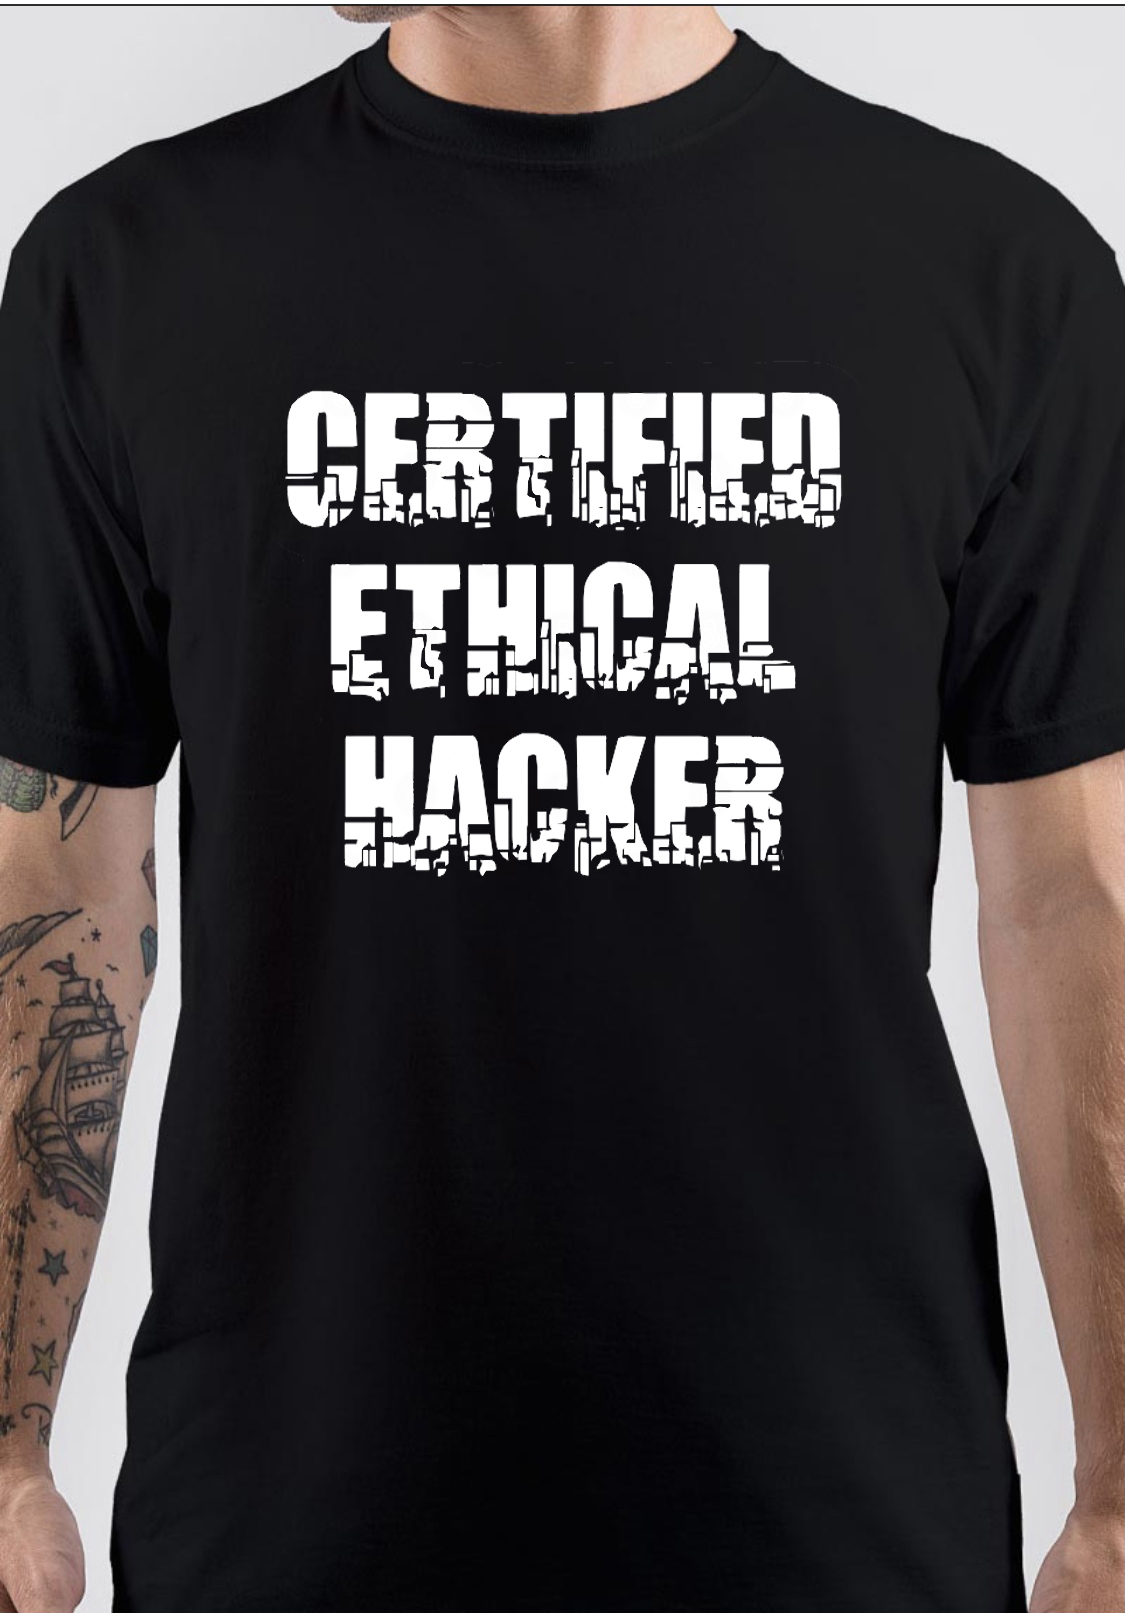 Certified Ethical Hacker T-Shirt2